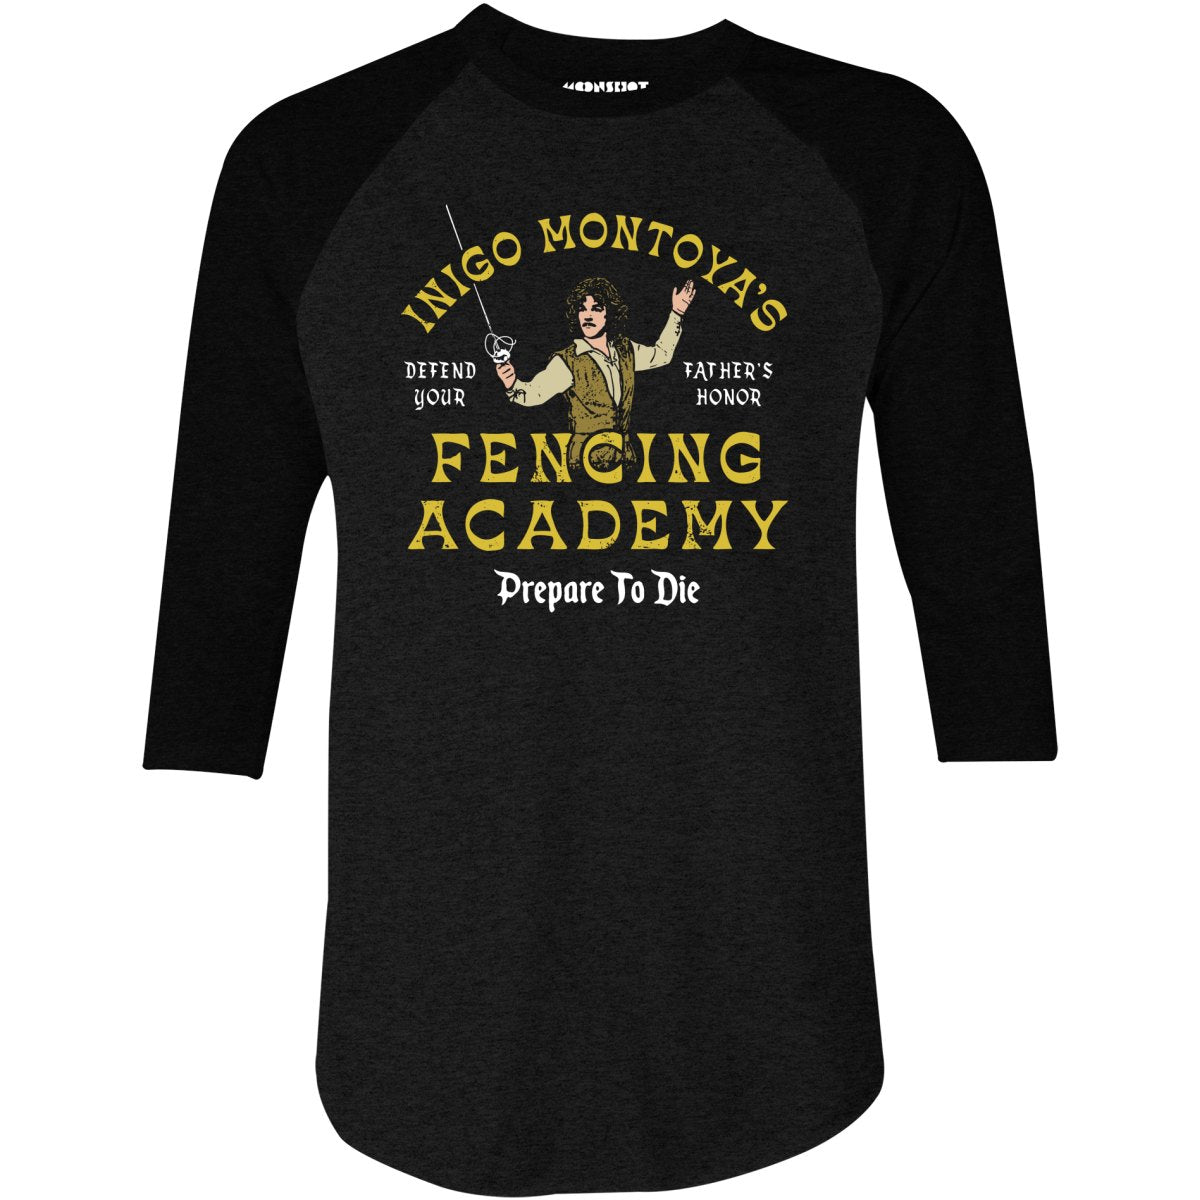 Inigo Montoya's Fencing Academy - 3/4 Sleeve Raglan T-Shirt